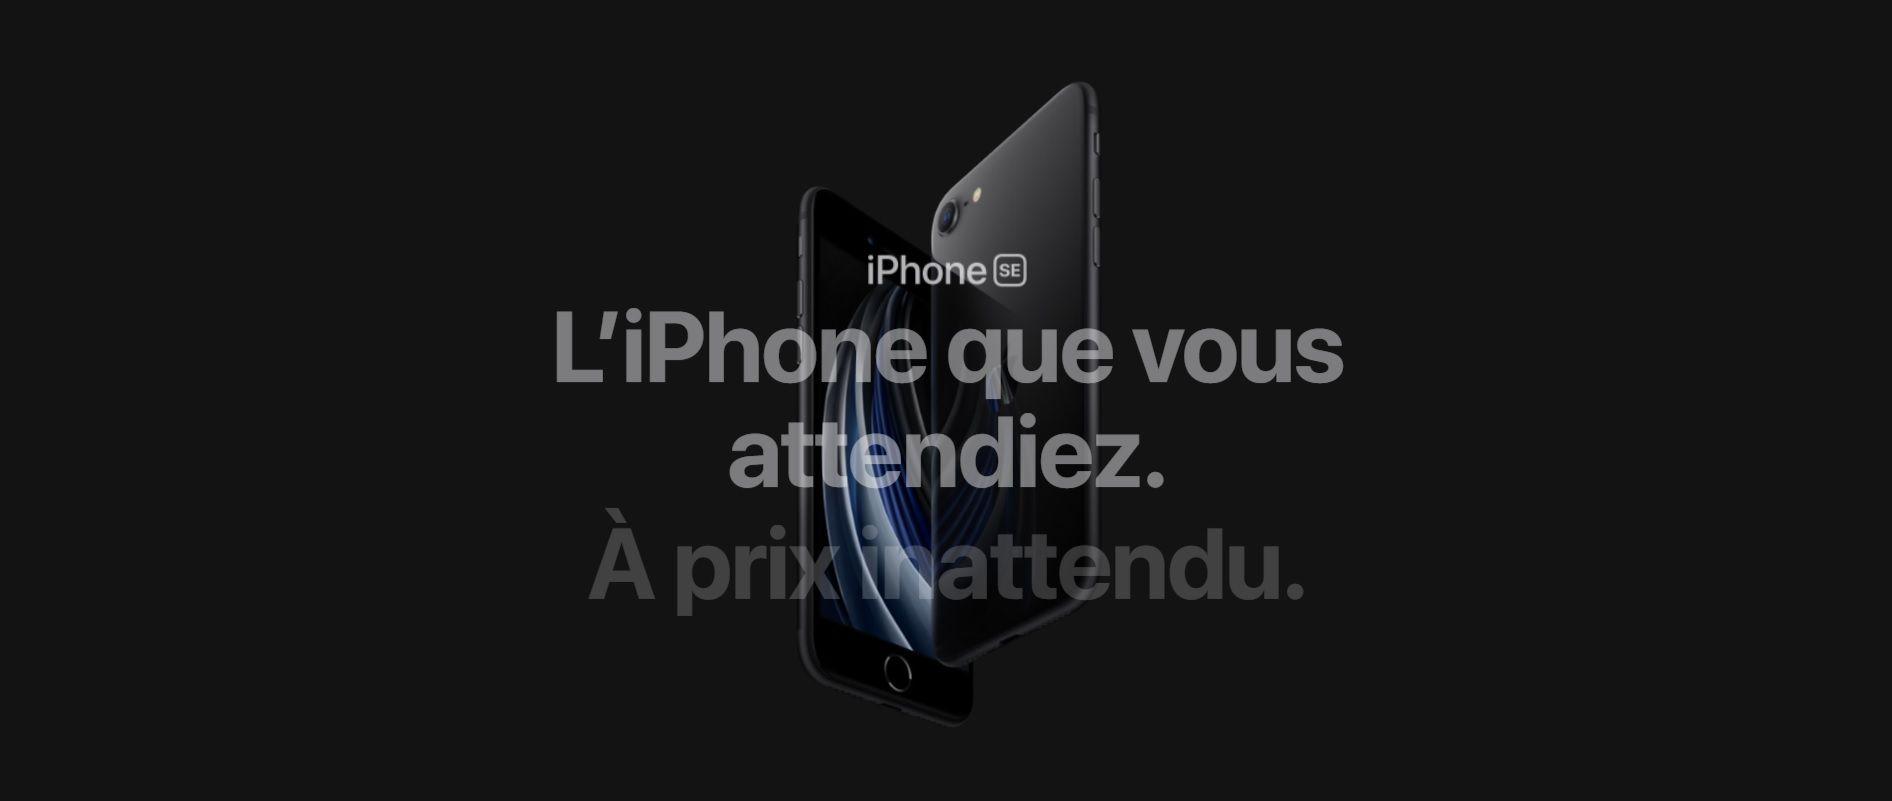 Apple iPhone SE (2020) Double SIM 128 Go Blanc image 1 | Rakuten